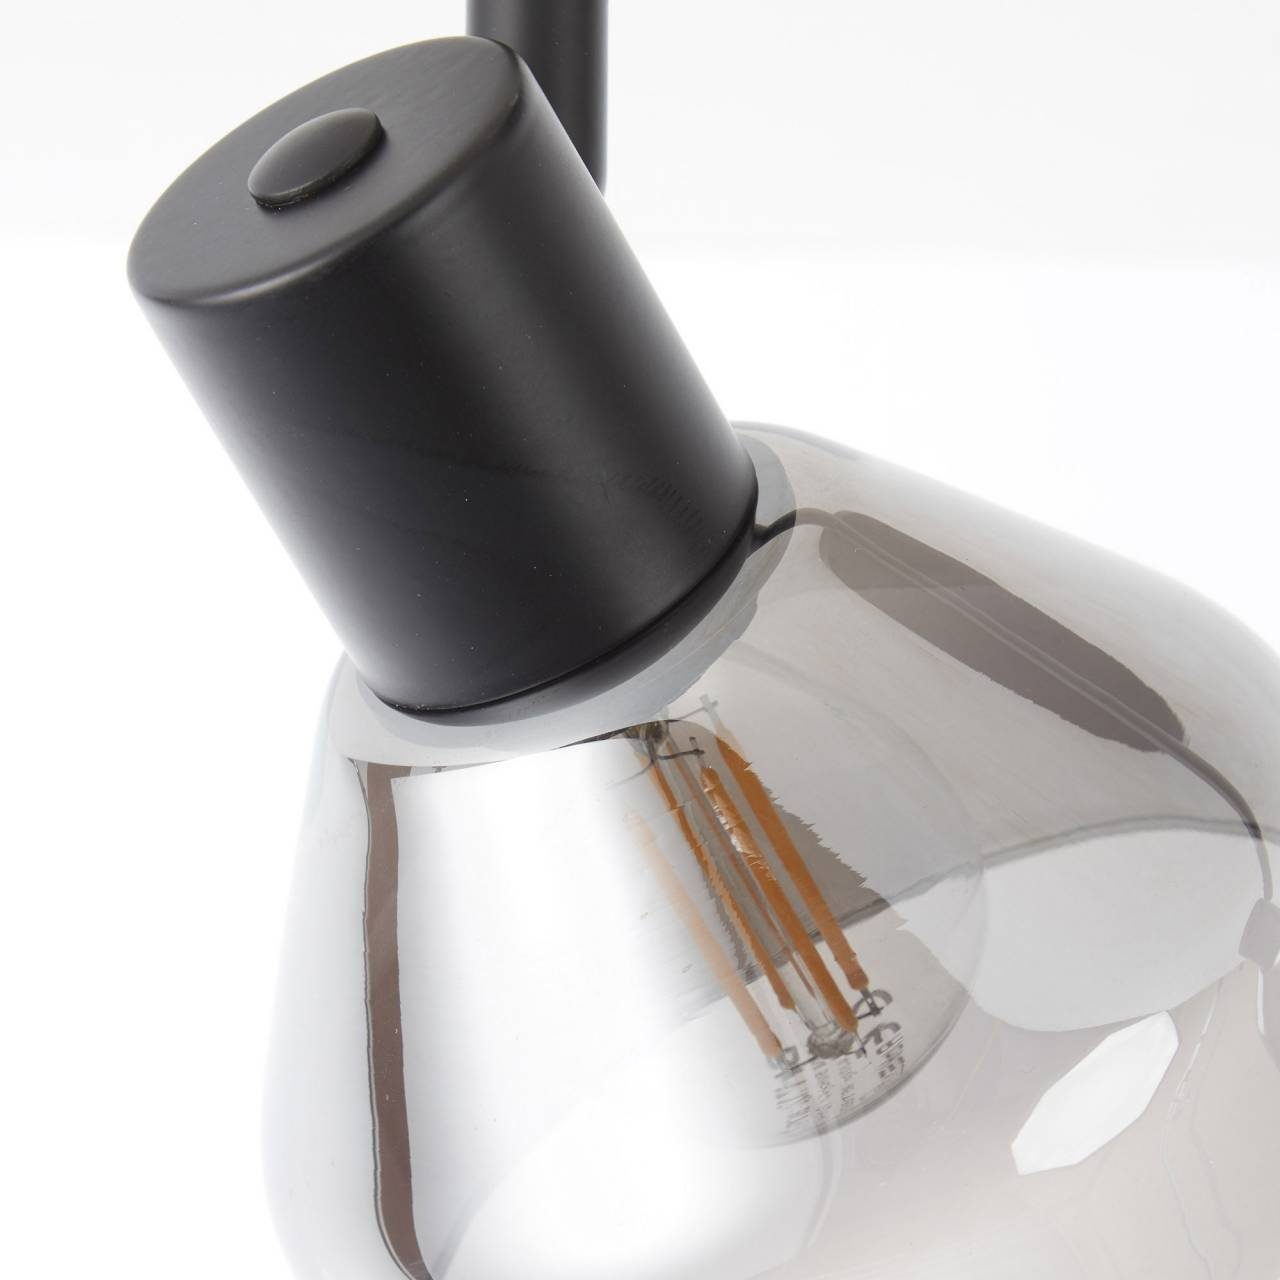 Brilliant Deckenleuchte Reflekt, Lampe Reflekt E14, 2flg 2x D45, schwarzmatt/rauchglas Spotrohr 18W